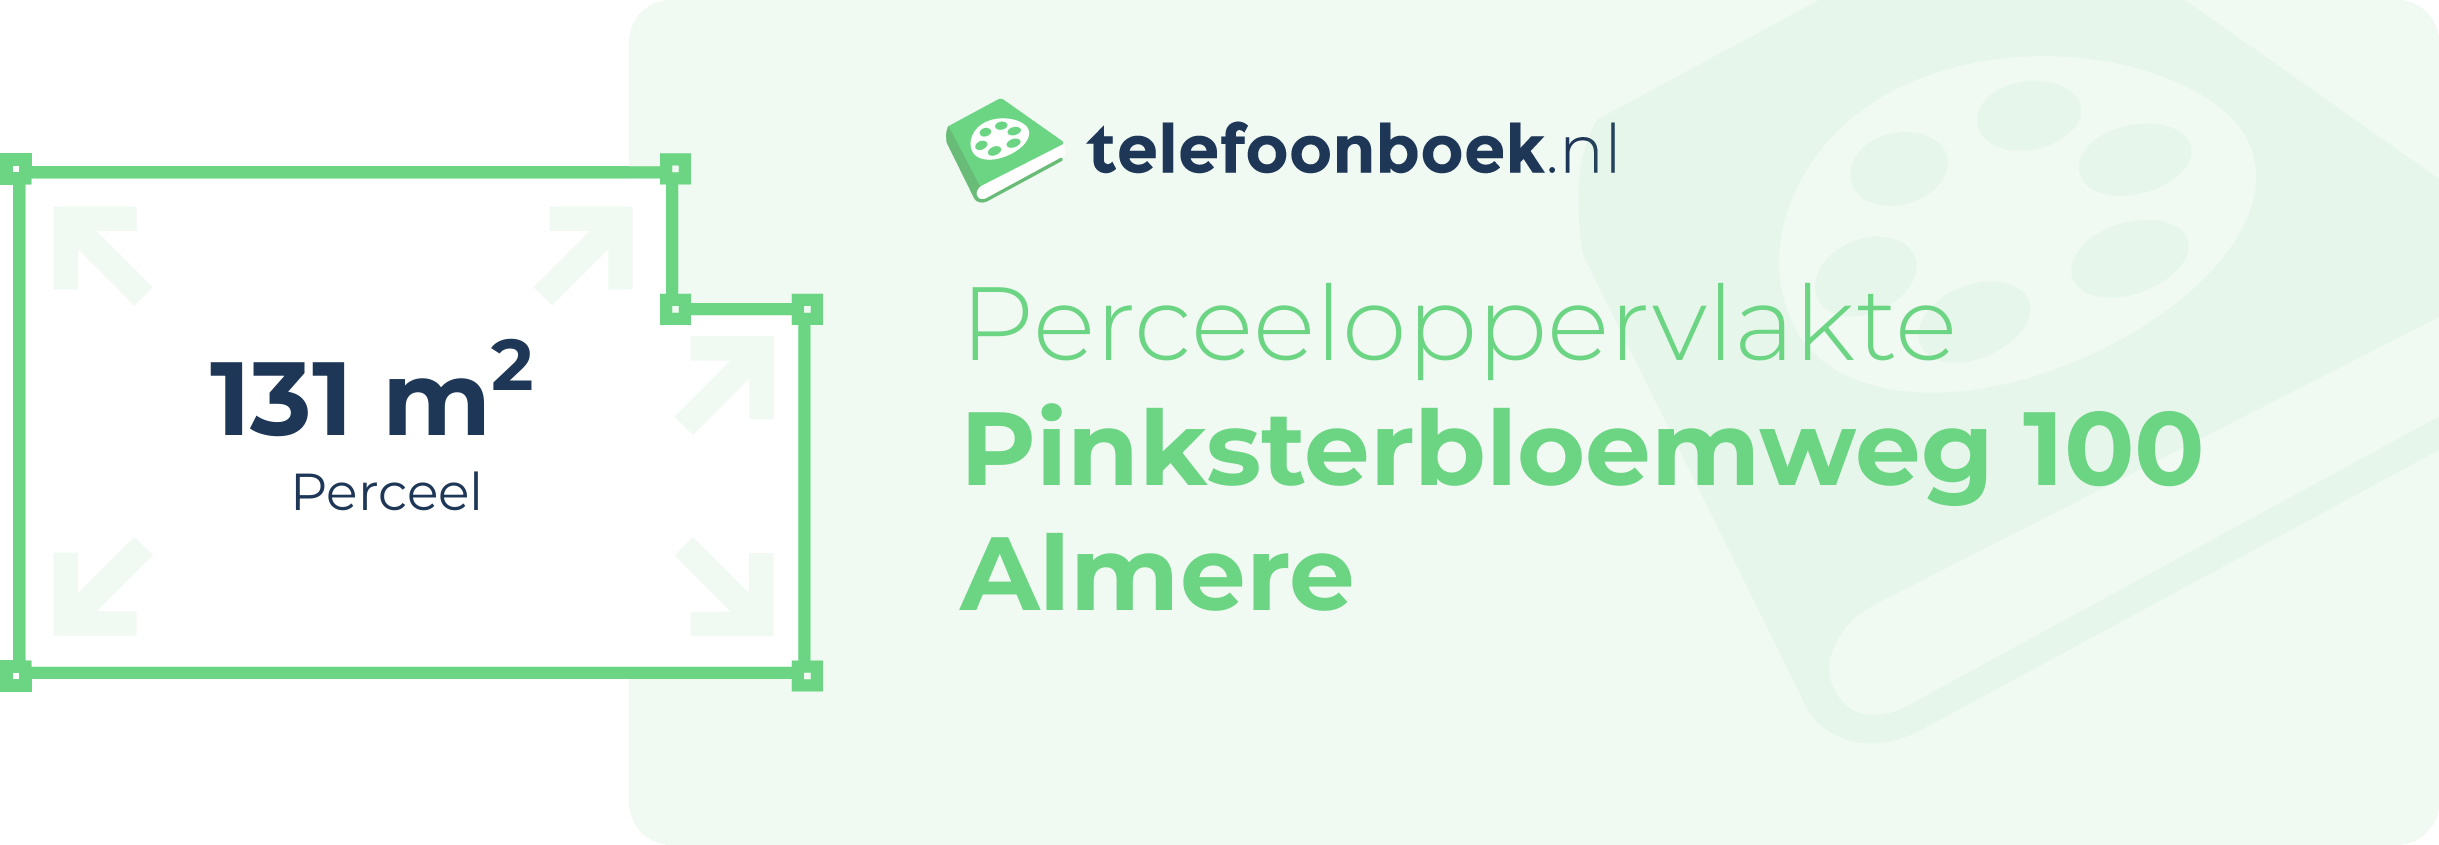 Perceeloppervlakte Pinksterbloemweg 100 Almere